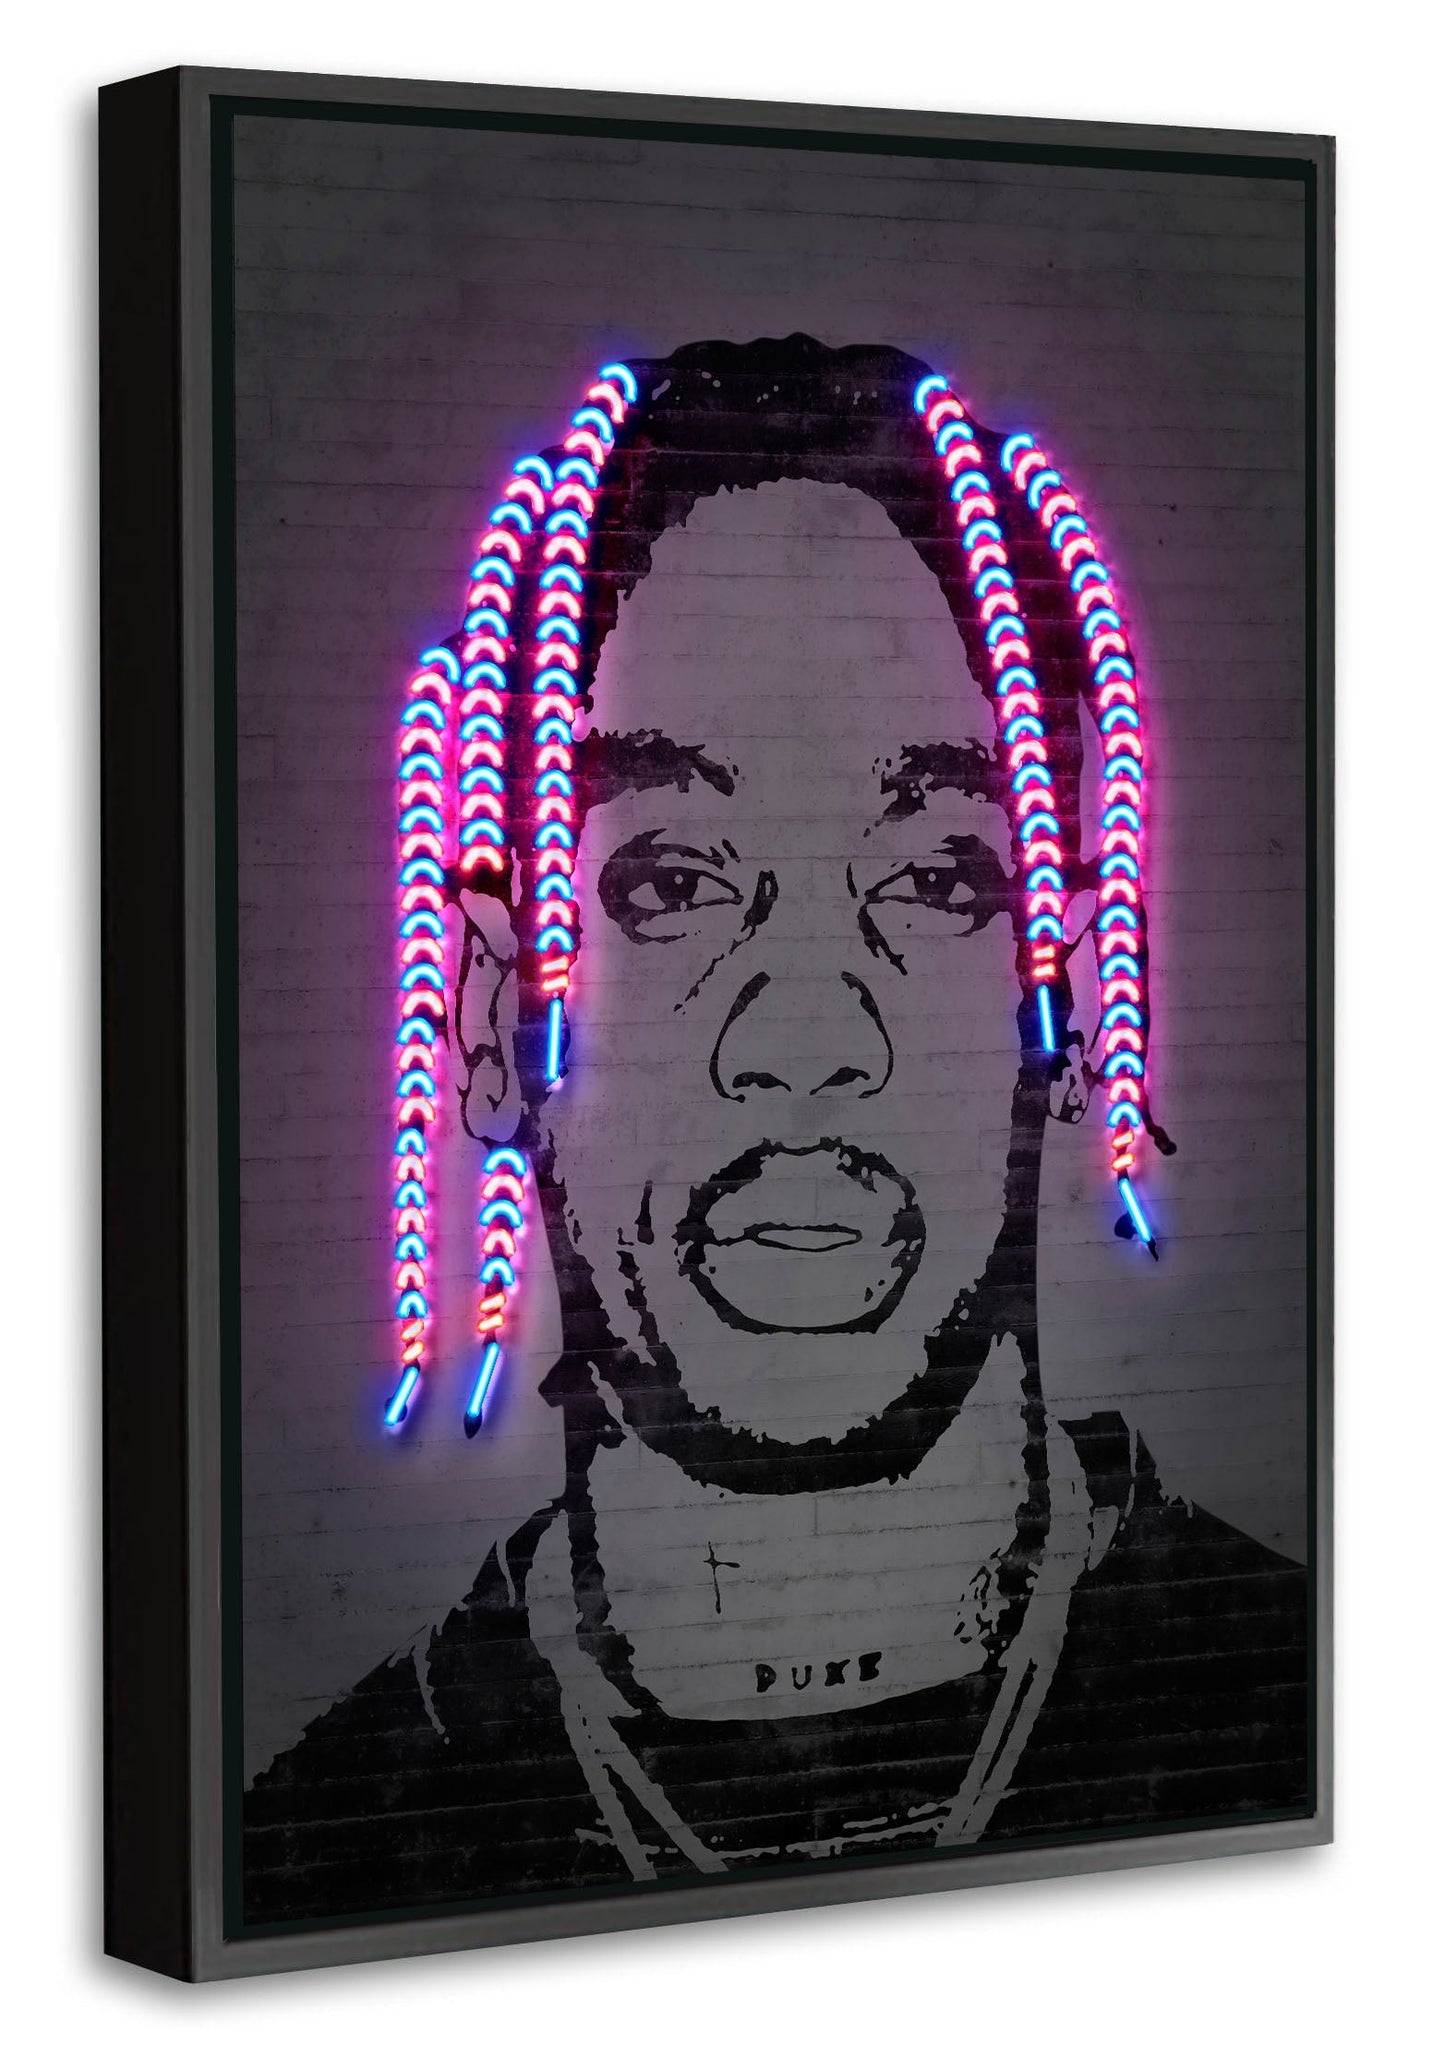 Travis-neon-art, print-Canvas Print with Box Frame-40 x 60 cm-BLUE SHAKER